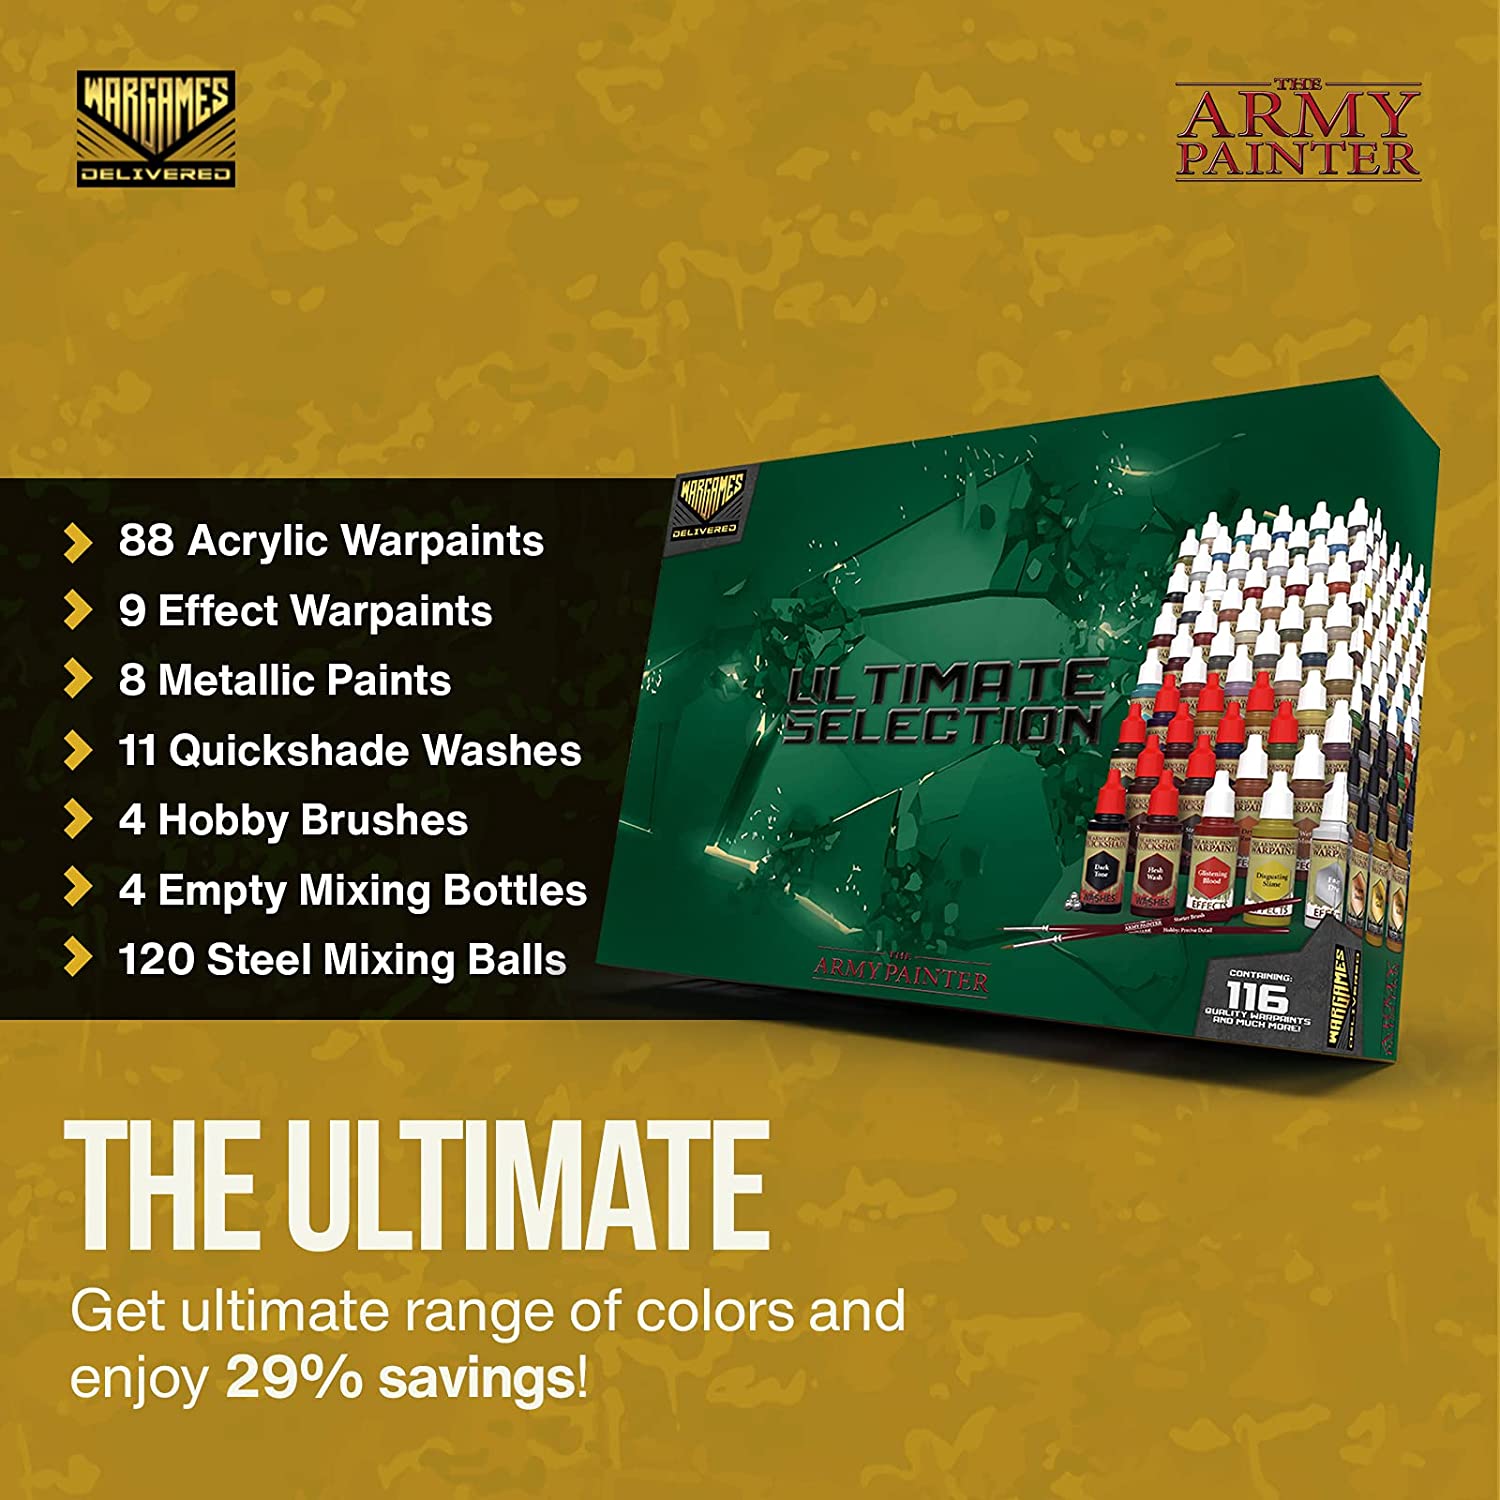 The Army Painter x Wargames Delivered Mega Miniature Paint Set, Acrylic  Paint Model Paint Kit for Plastic Models 